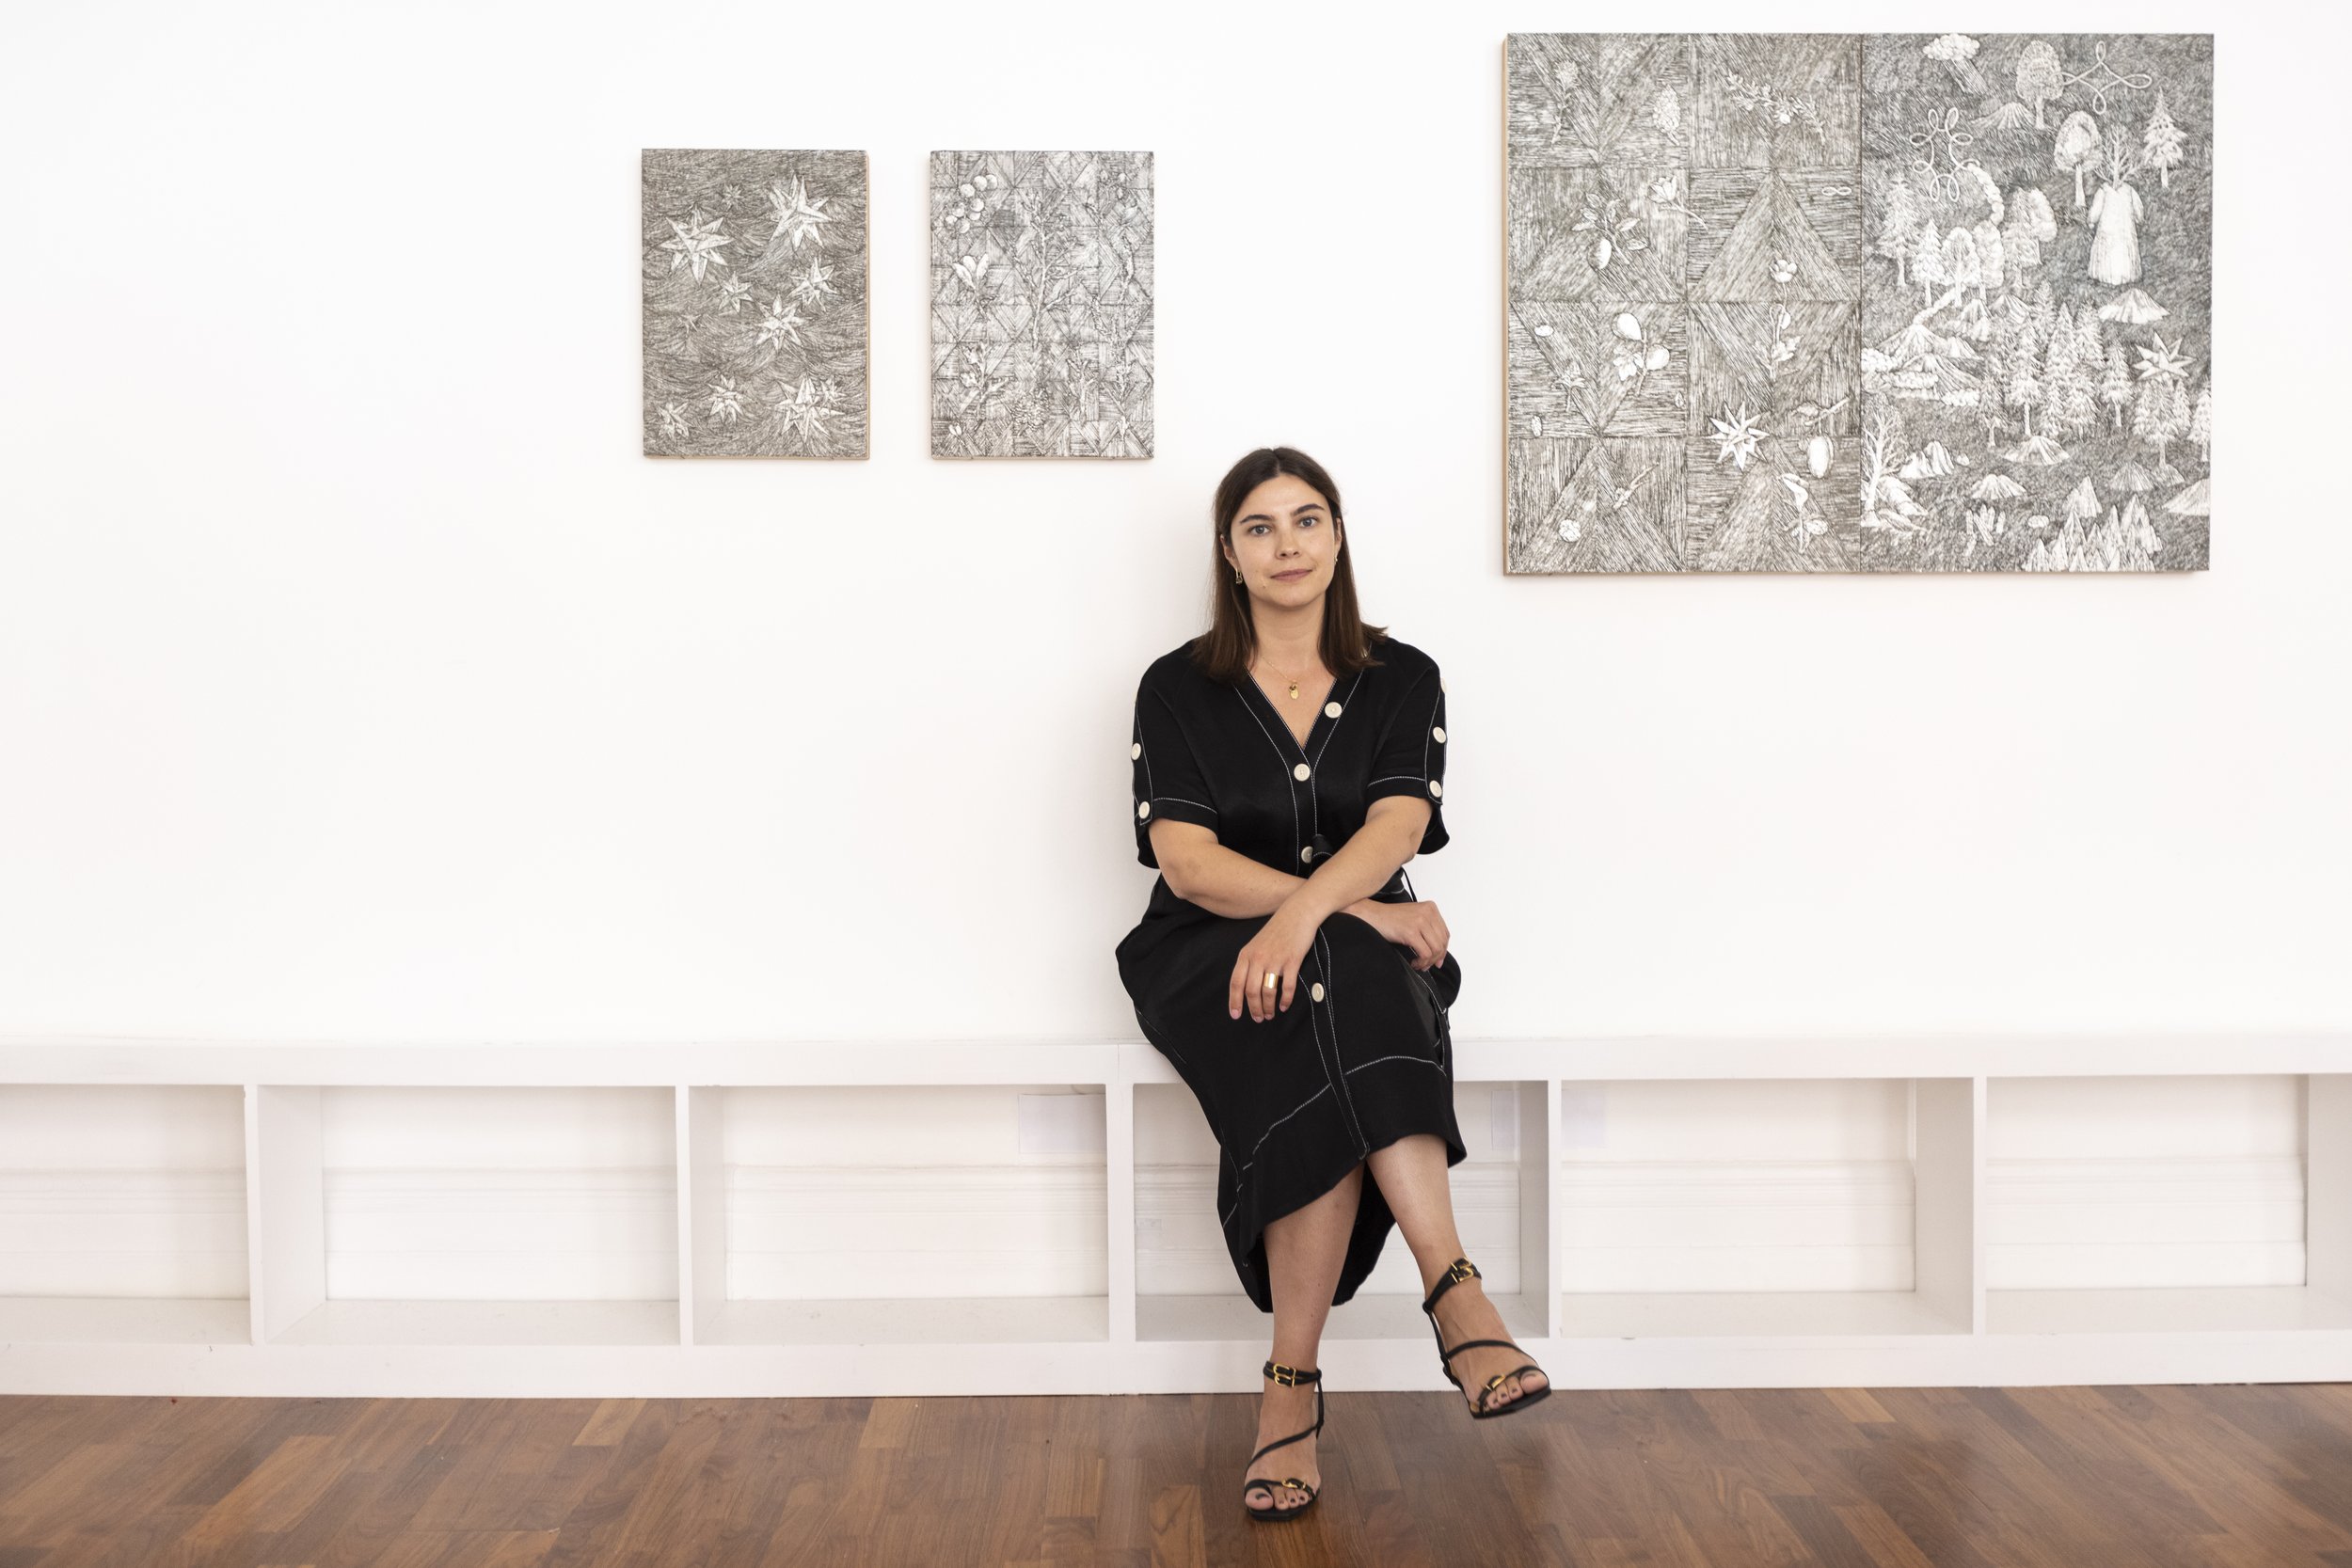 Exhibition curator Julia Tarasyuk posing in front of Nana Funo’s artworks. ©Will Amlot 